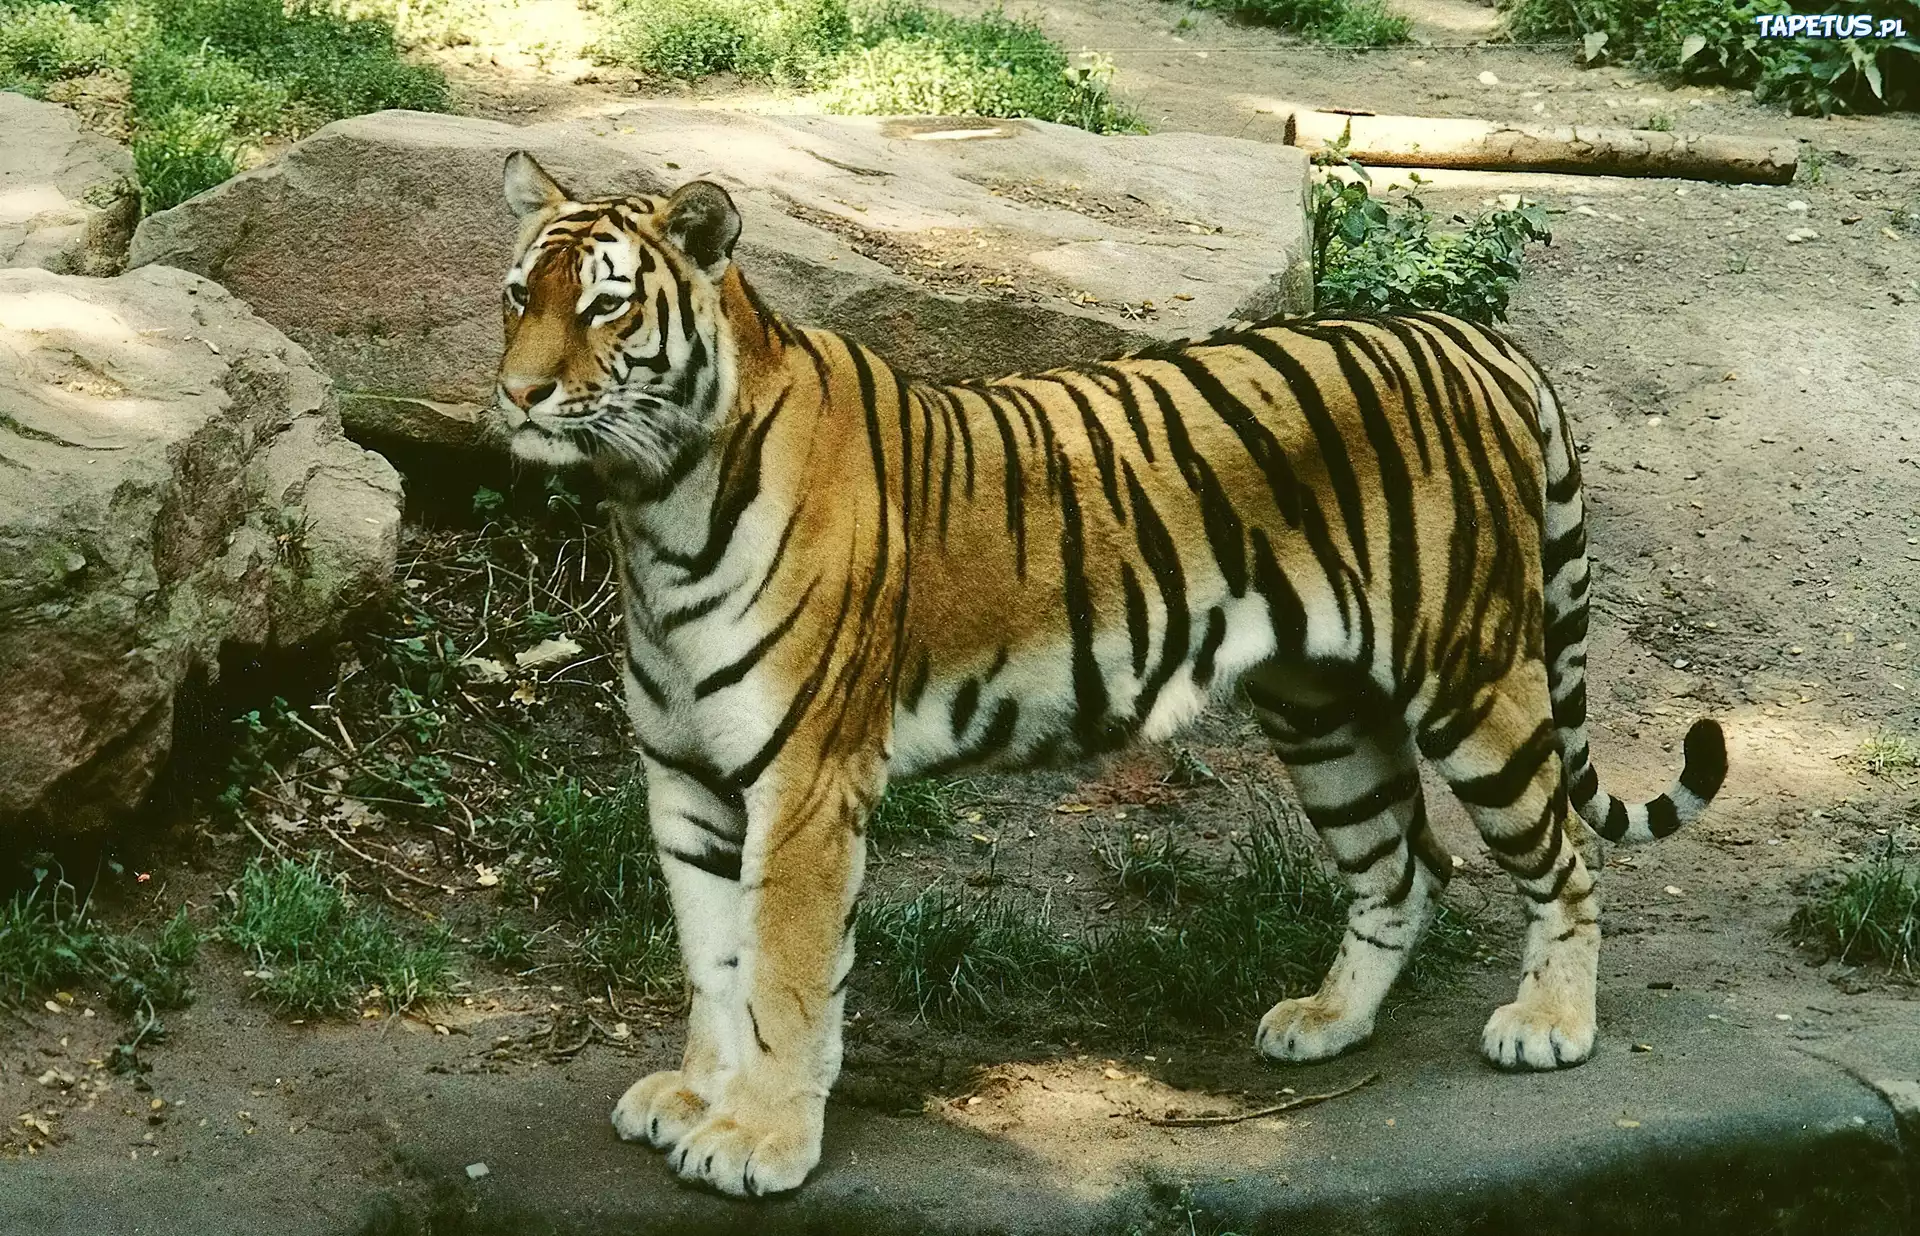 Названия видов тигров. Закавказский Туранский тигр. Тигр Panthera Tigris. Яванский тигр (Panthera Tigris sondaica). Туранский (Каспийский) тигр.